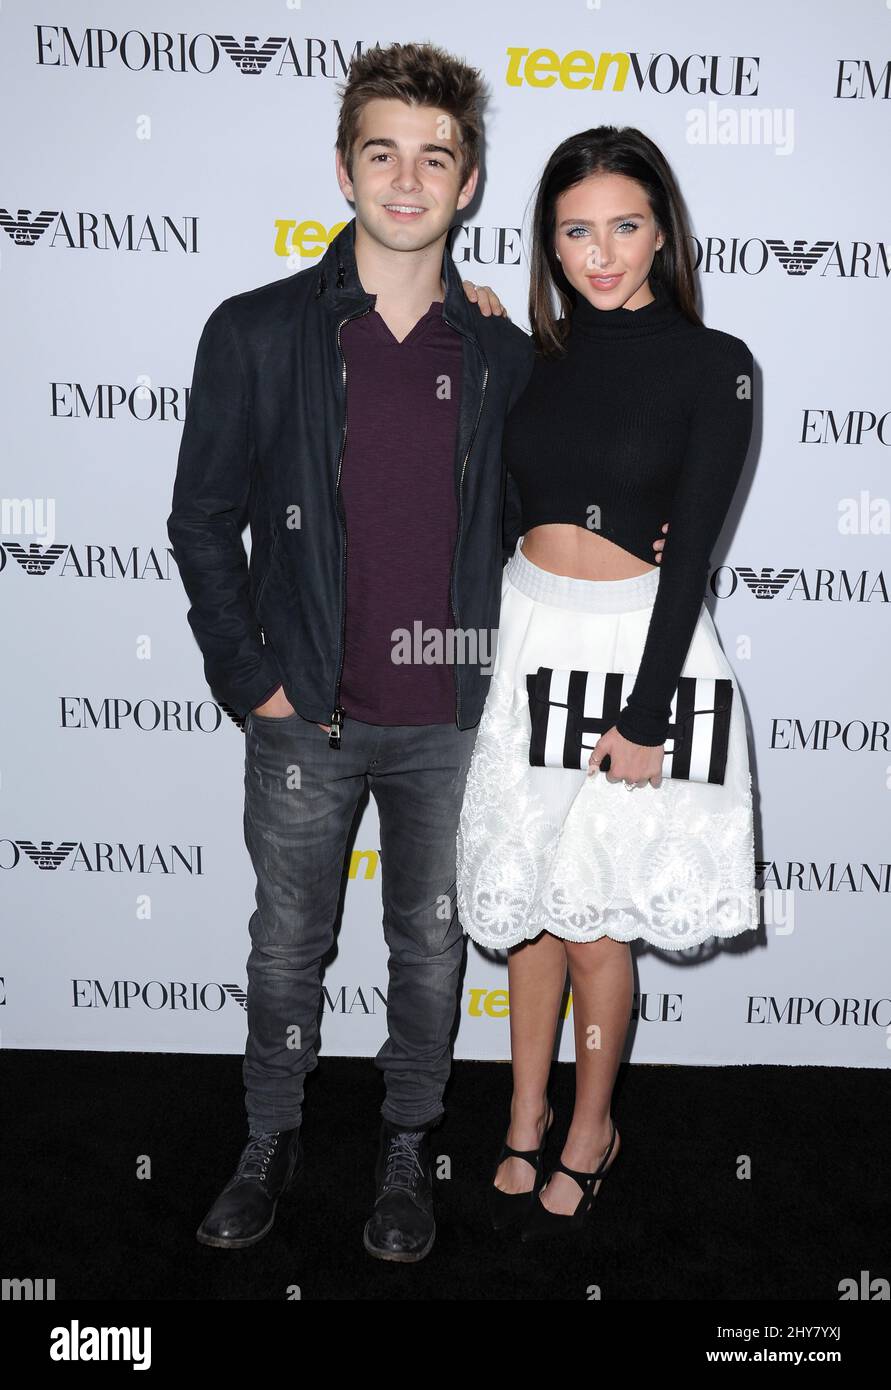 Ryan Newman partecipa alla festa annuale 13th di Teen Vogue Young Hollywood a Los Angeles, California. Foto Stock